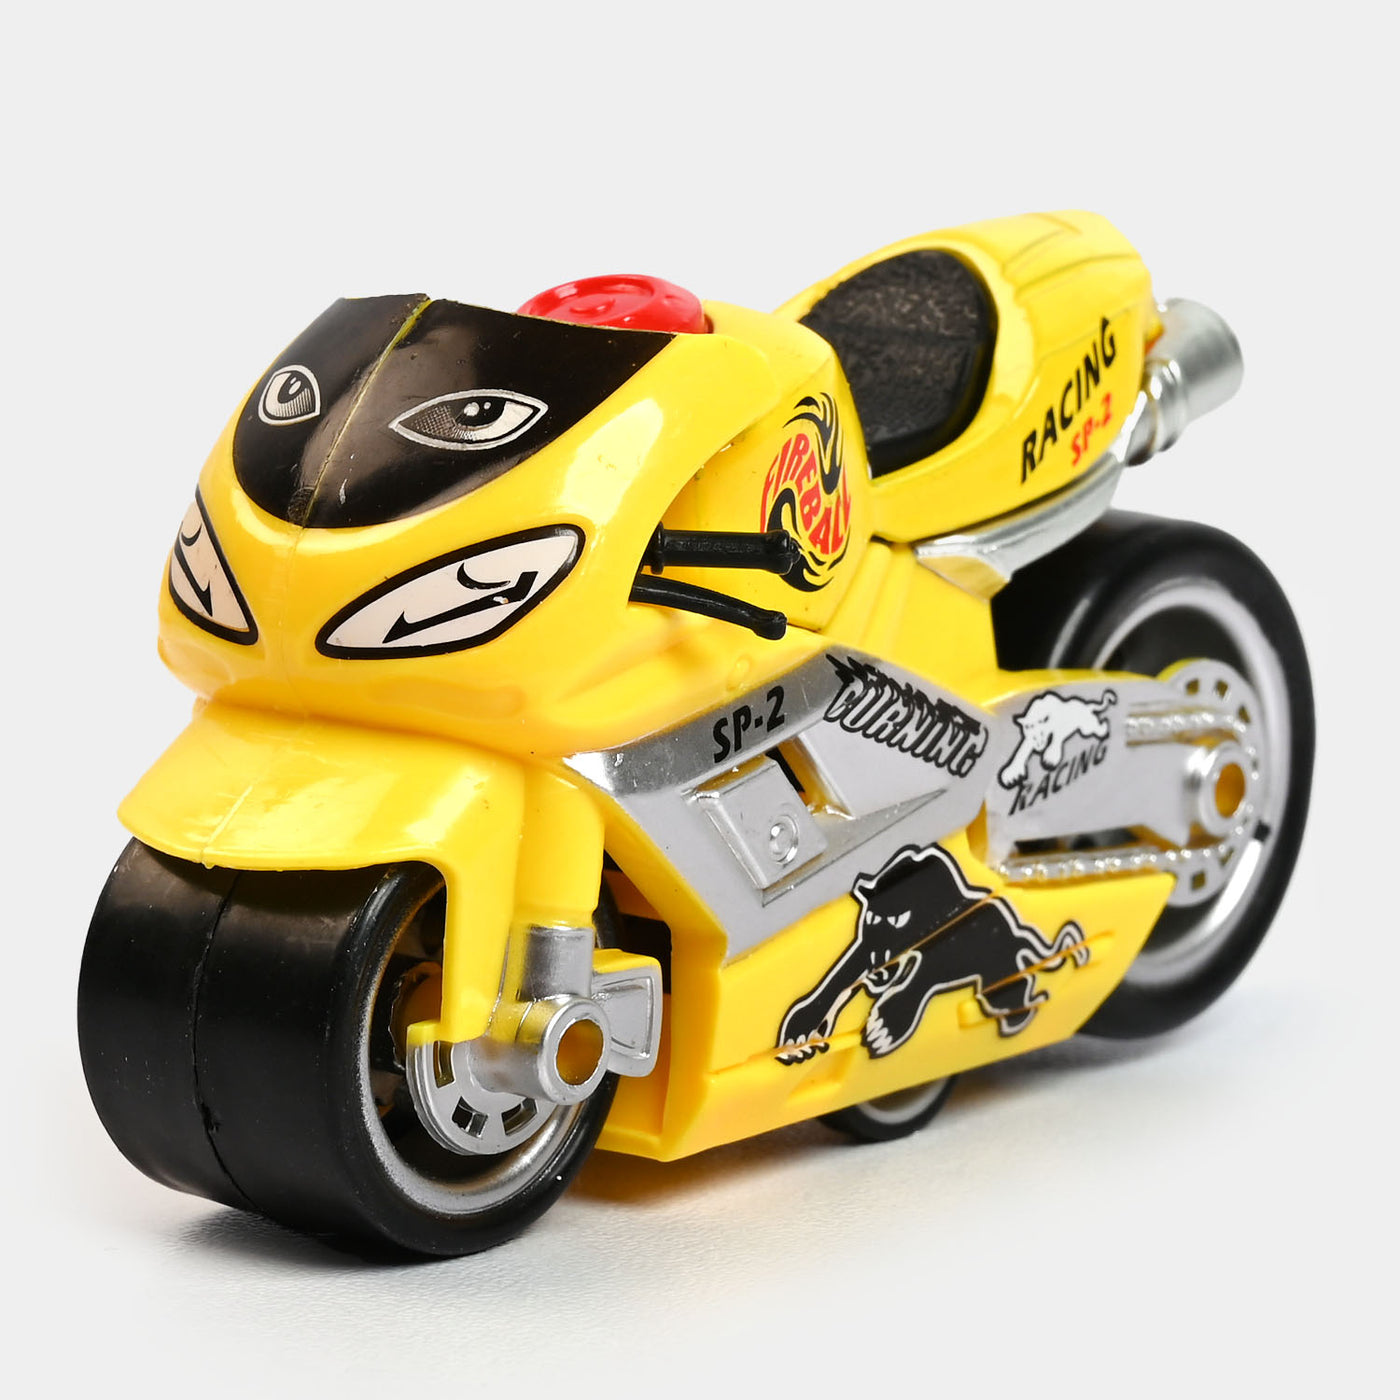 Die-Cast Motor Bike Toy For Kids Price in Pakistan